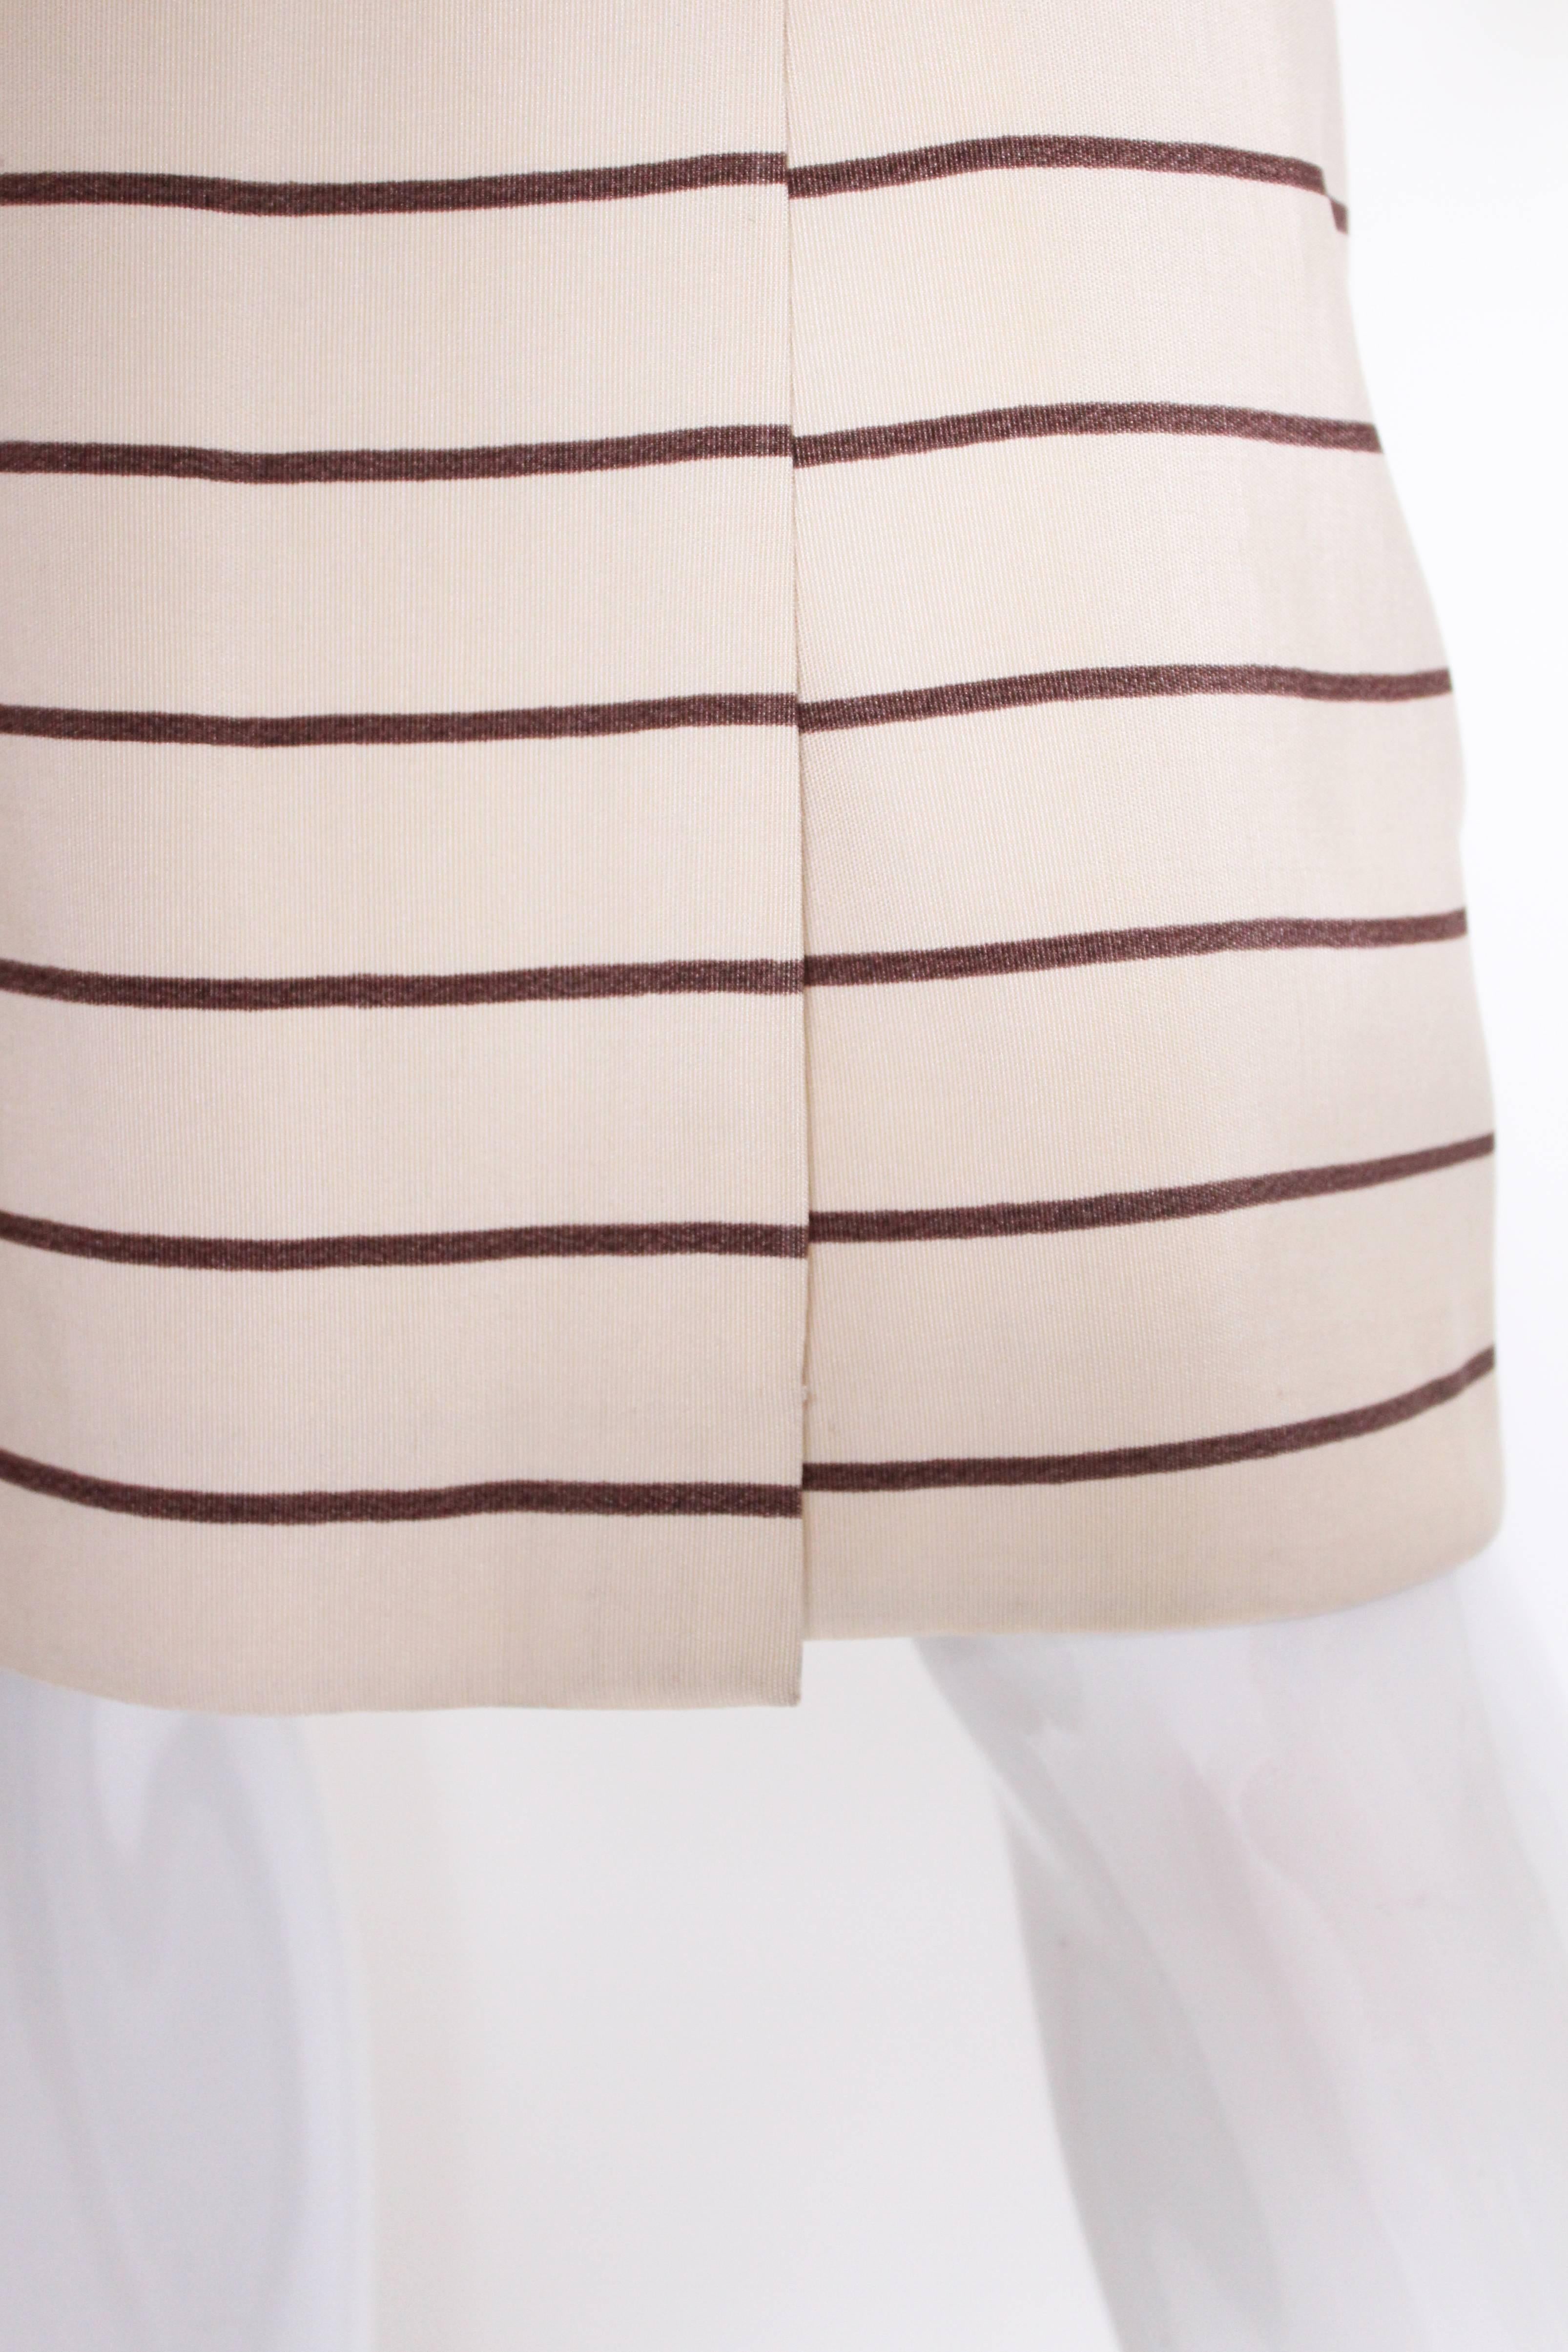 Chanel Haute Couture Skirt Suit, 1974 2